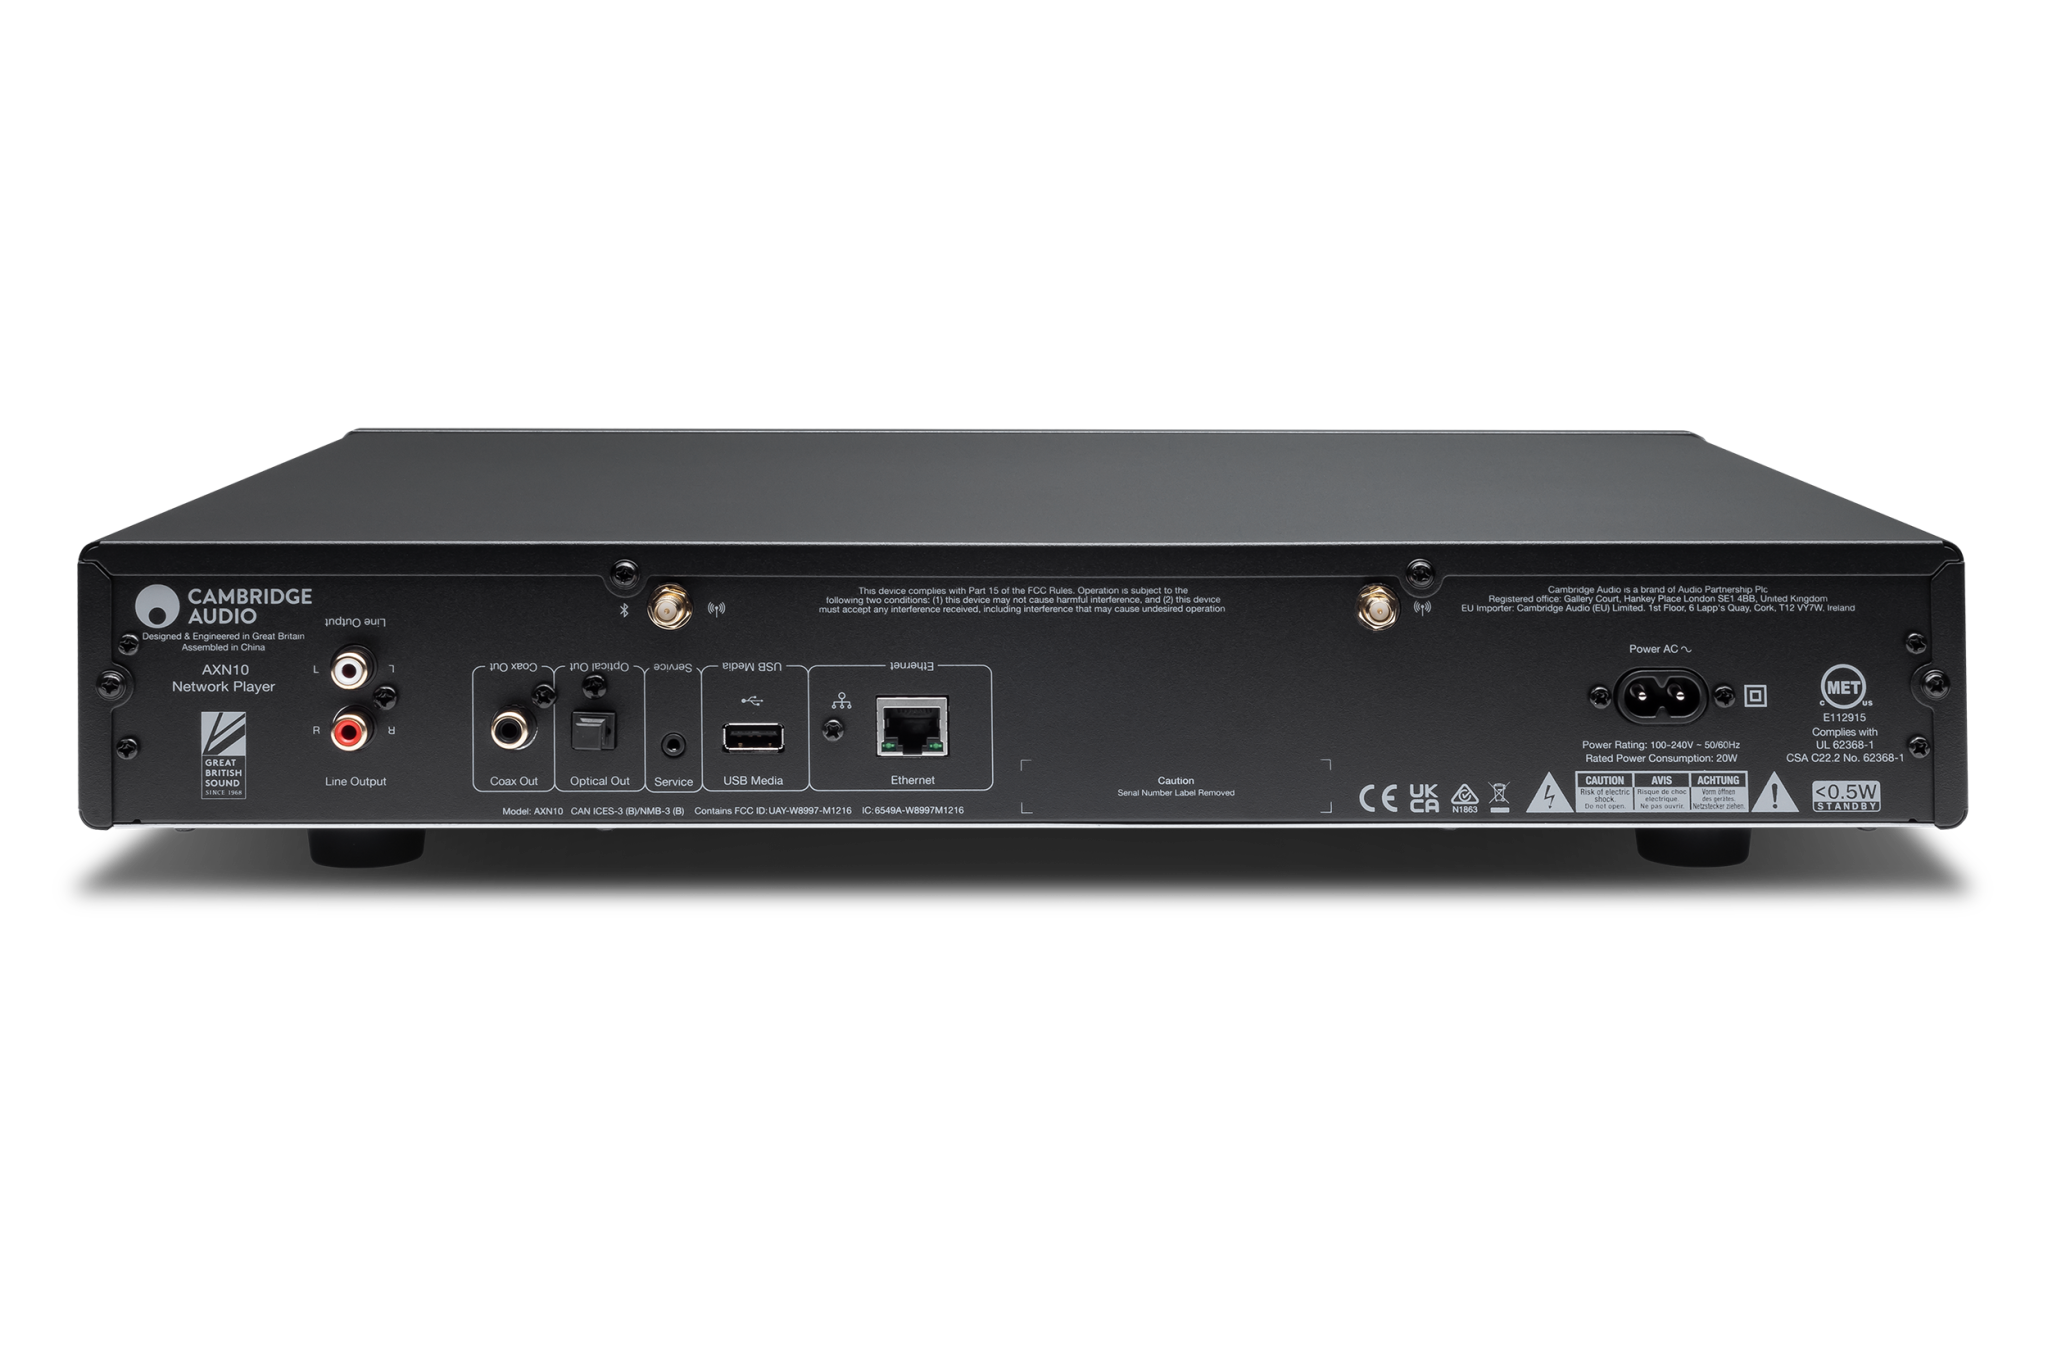 Cambridge Audio AXN10 Network Player - Dreamedia AV